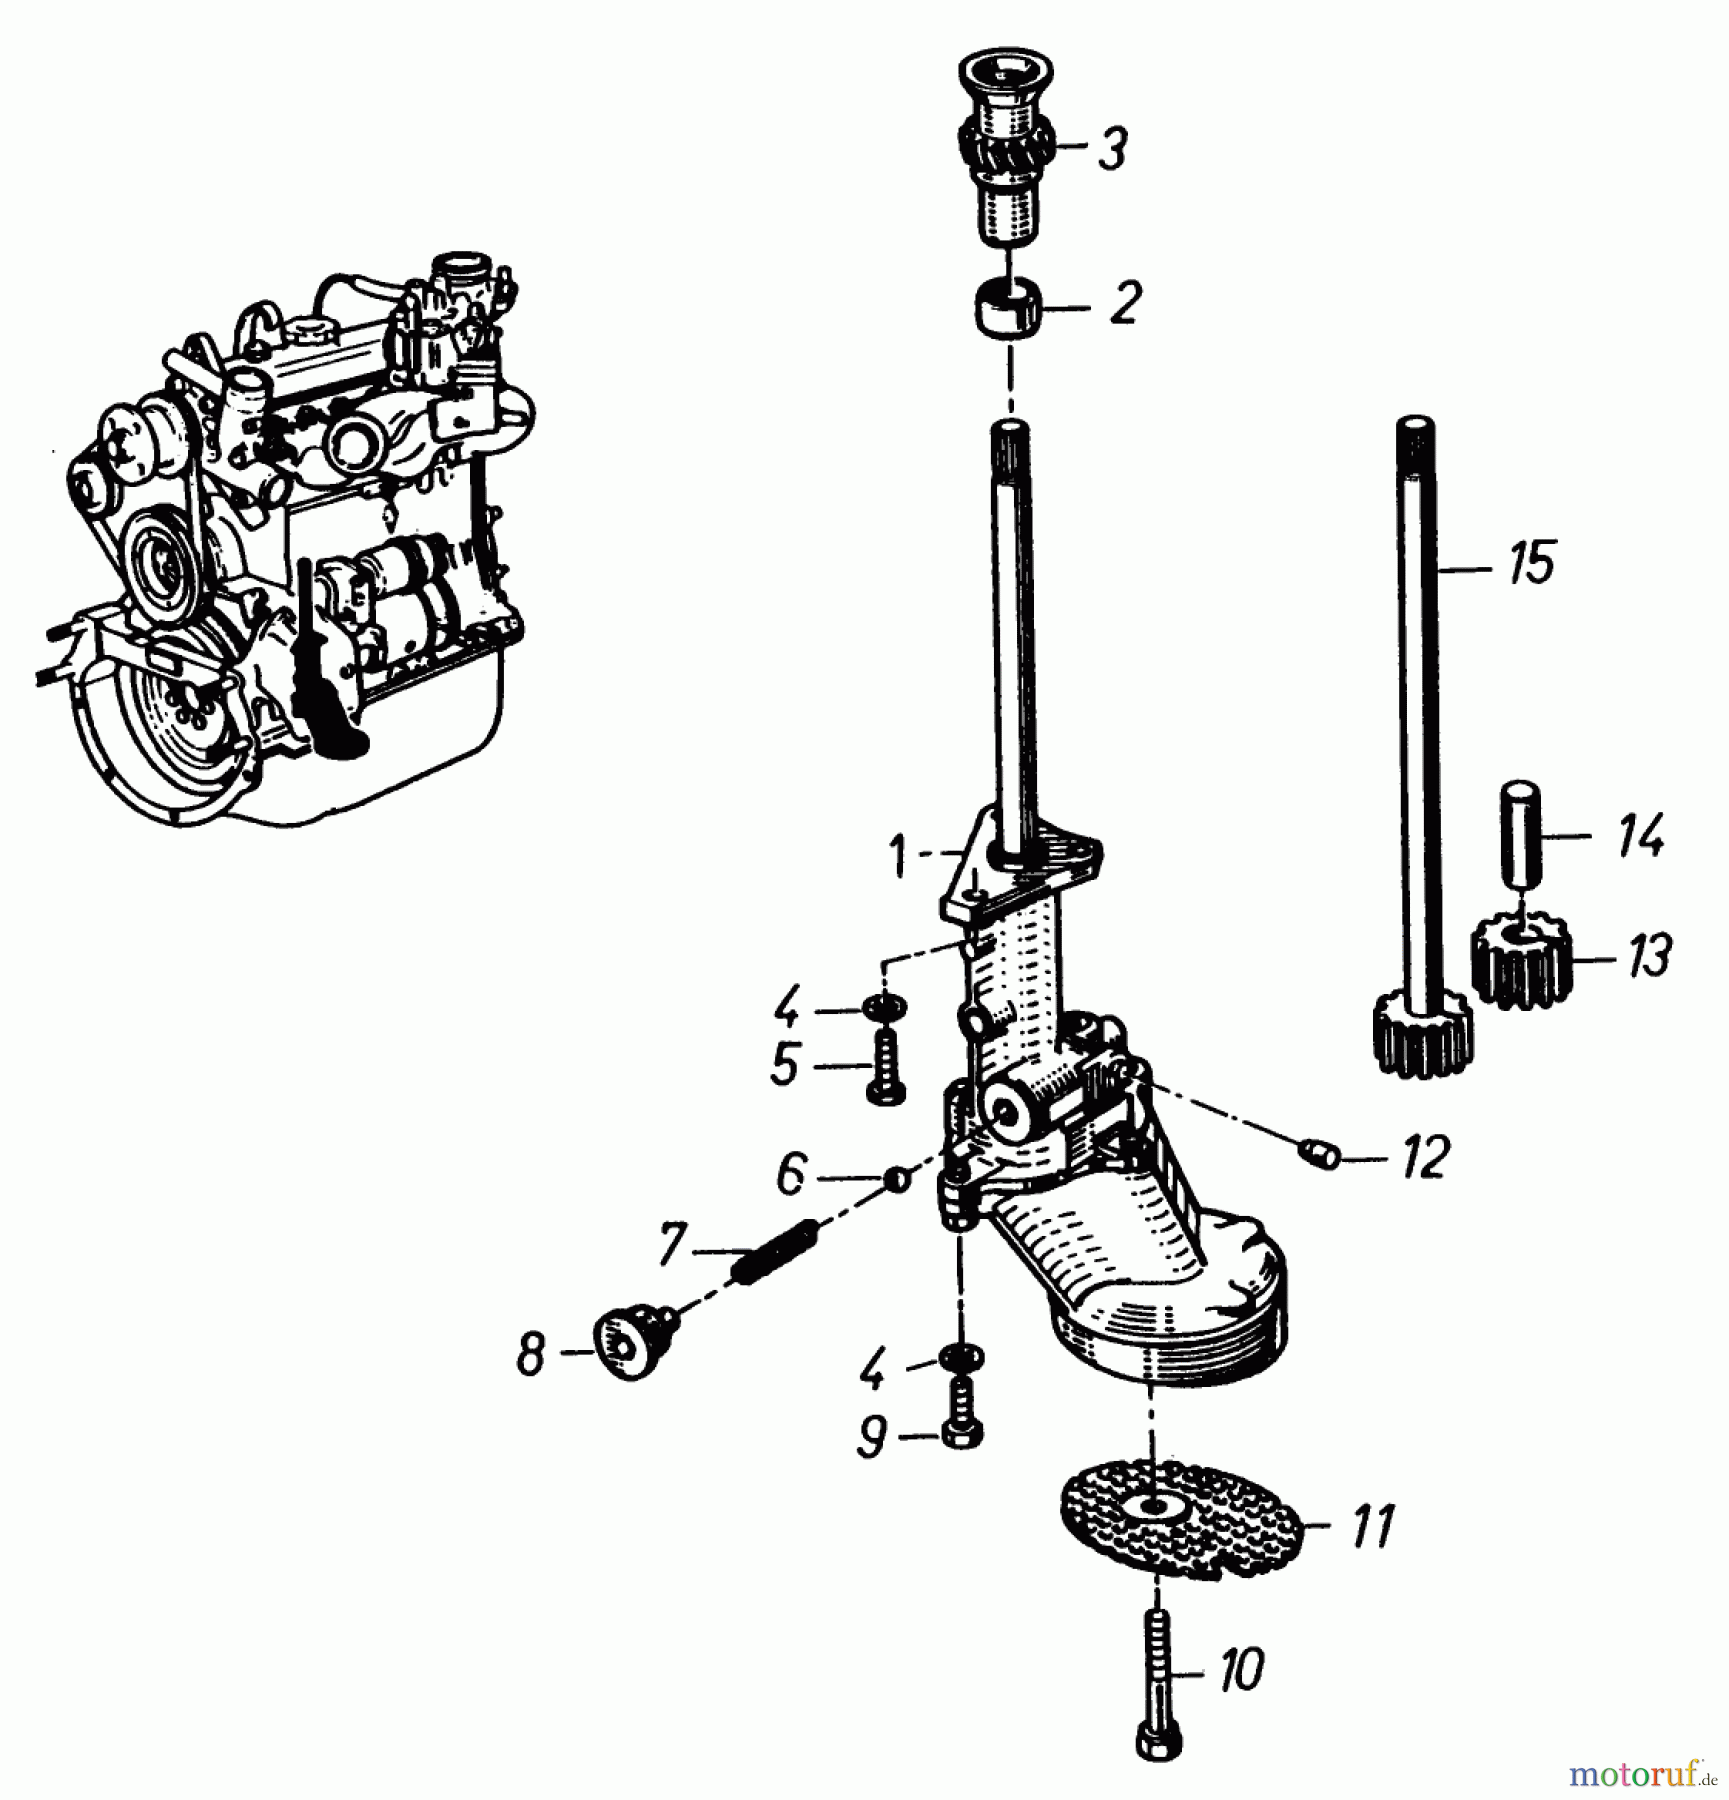  Toro Neu Mowers, Lawn & Garden Tractor Seite 2 91-20RG01 (D-250) - Toro D-250 10-Speed Tractor, 1981 OIL PUMP